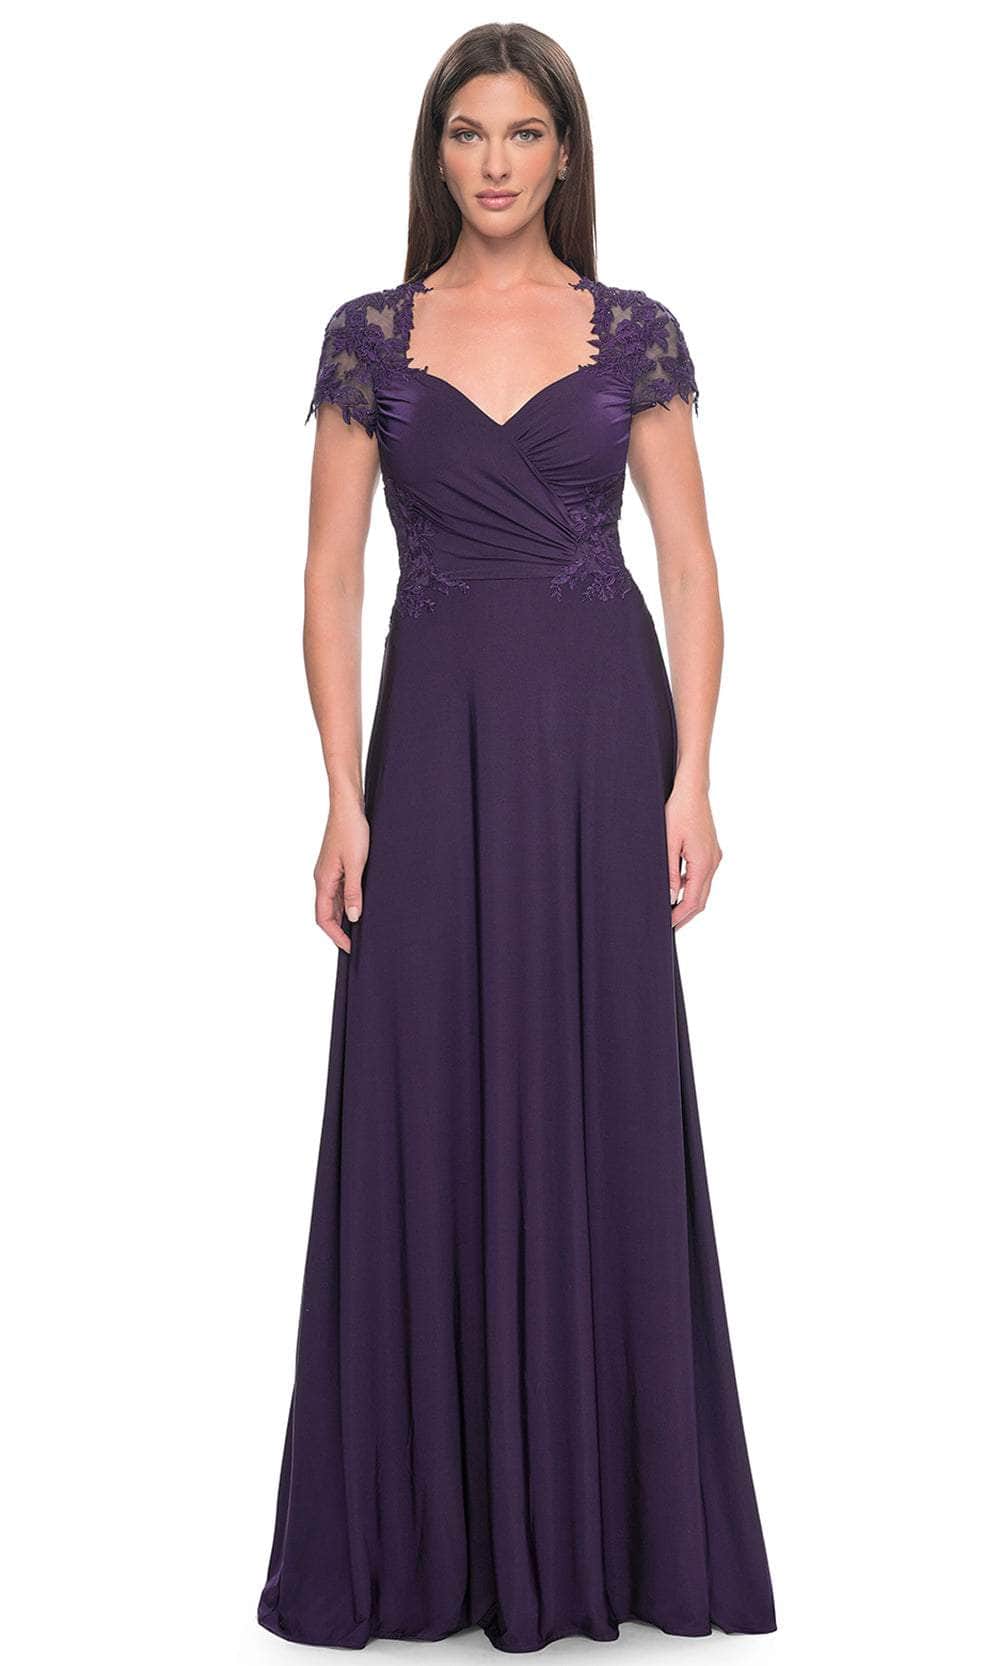 Image of La Femme 31906 - Sweetheart A-Line Formal Dress